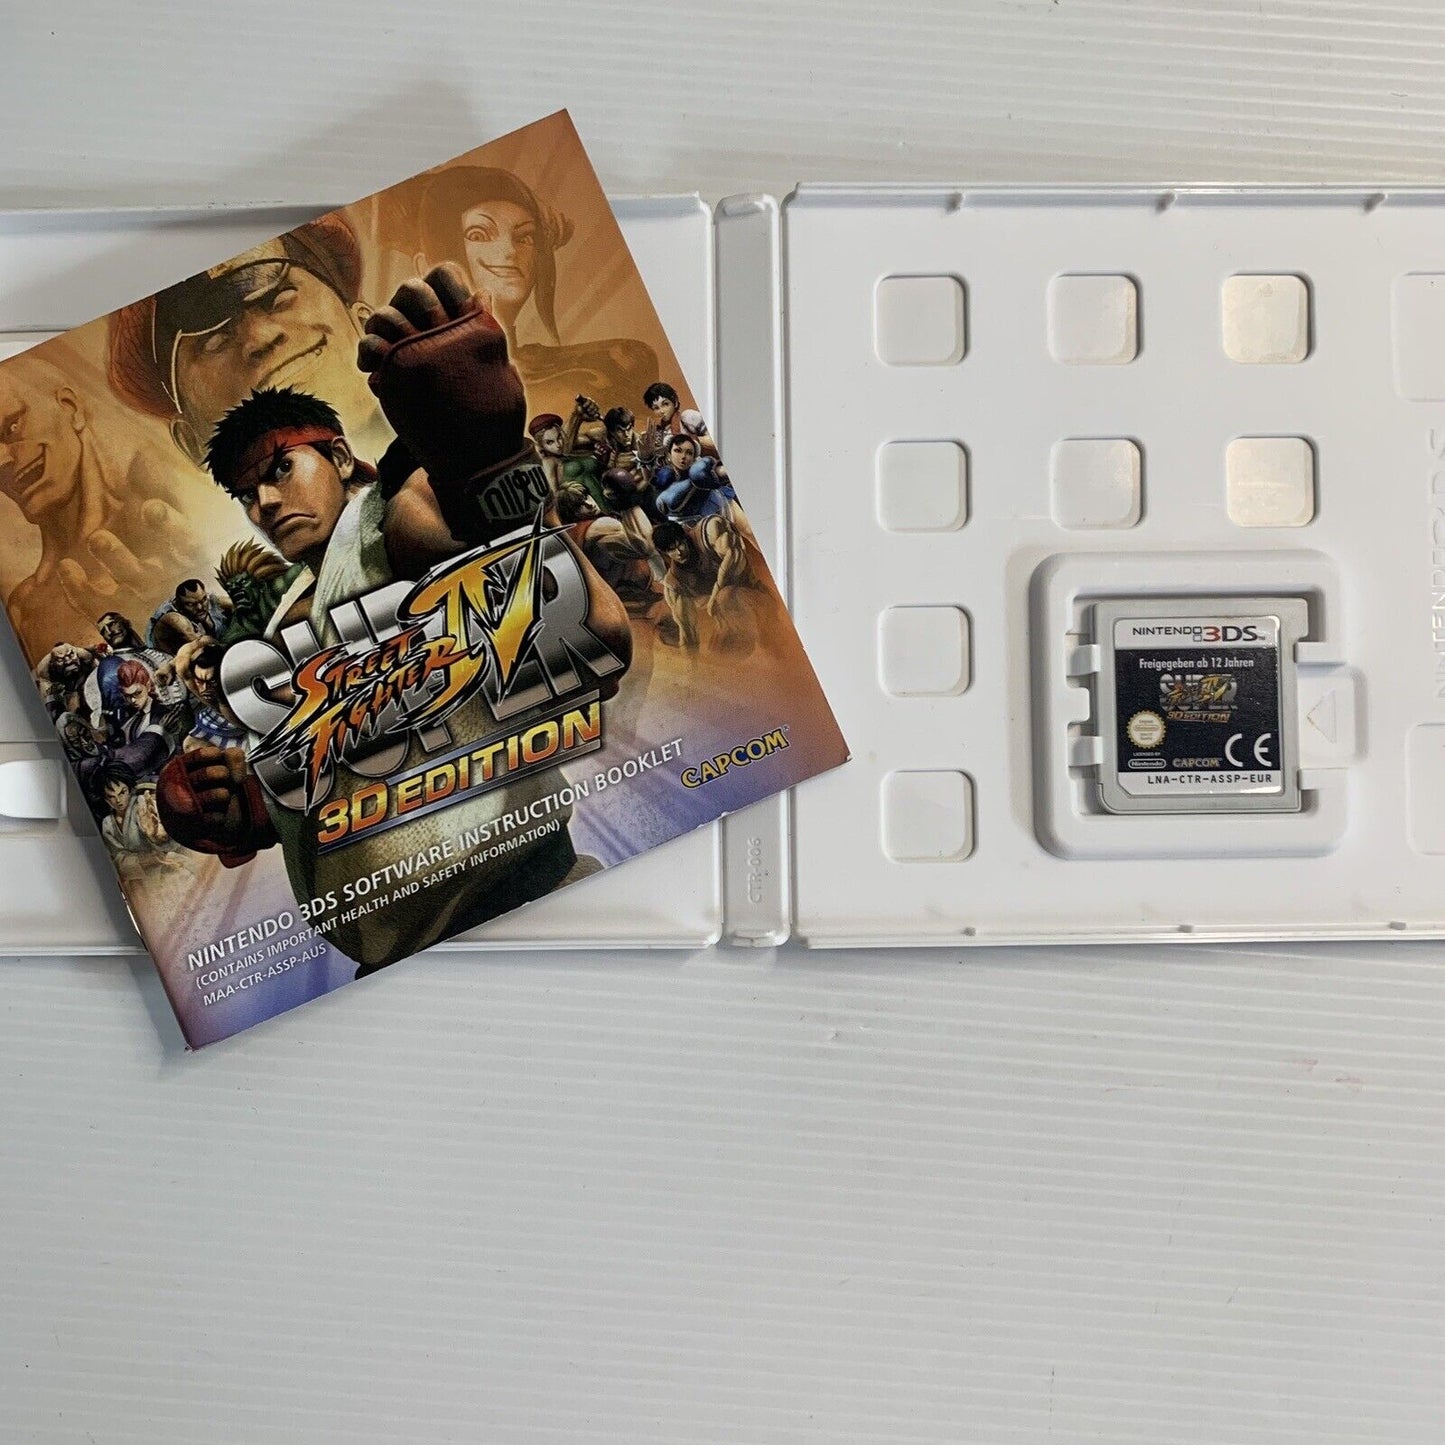 Super Street Fighter IV 3D Edition Nintendo 3DS Game